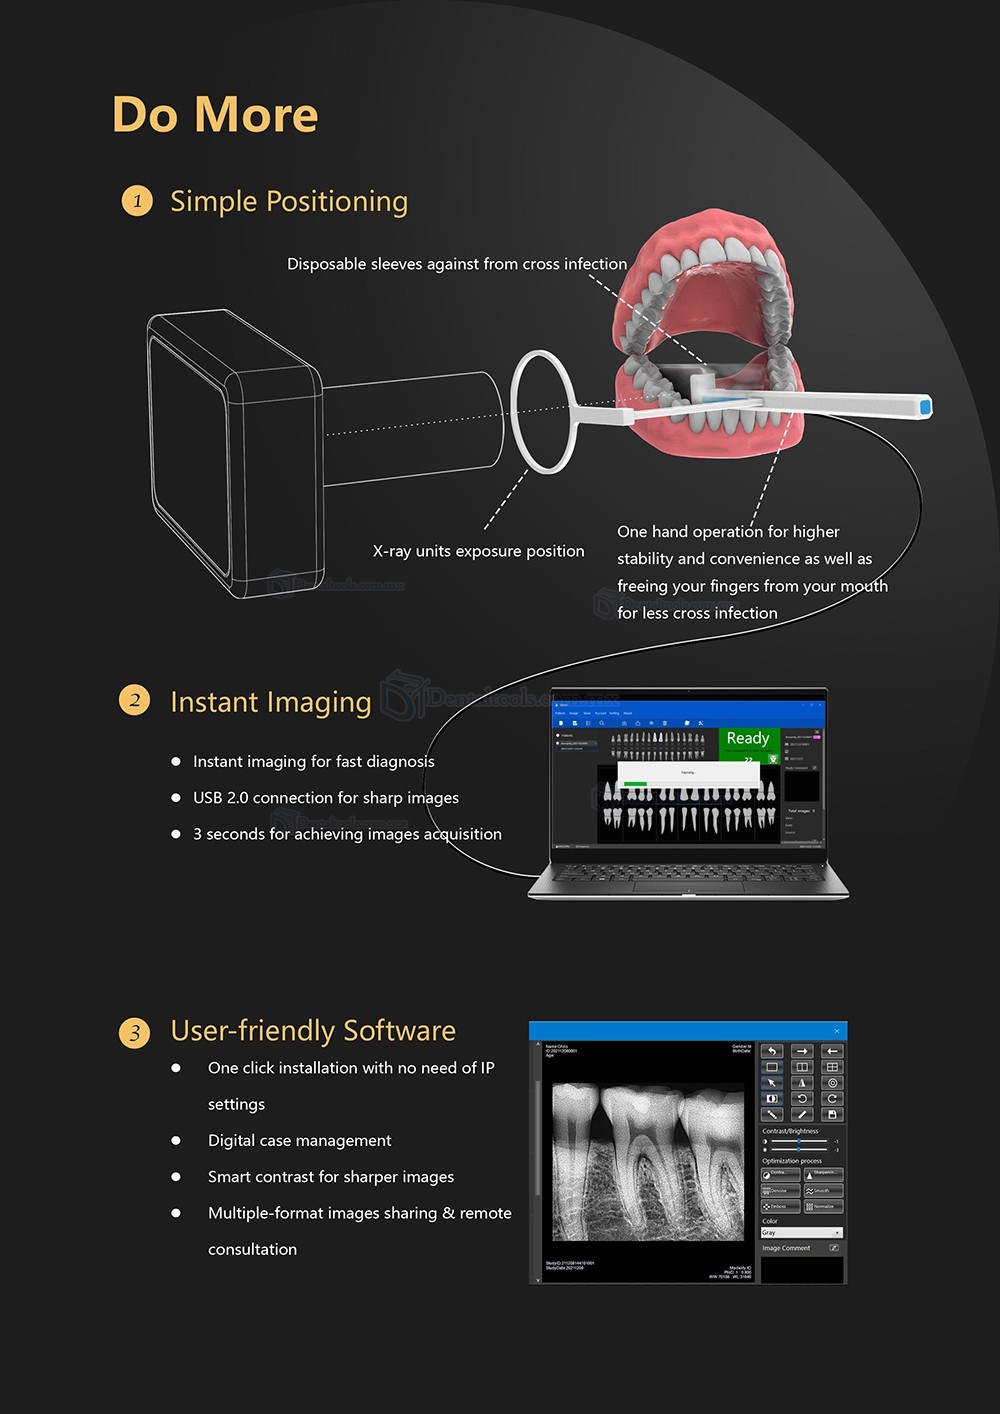 Sensor Digital de Rayos X Dental Sensor Radiográfico Intraoral Sensor RX Dental RVG